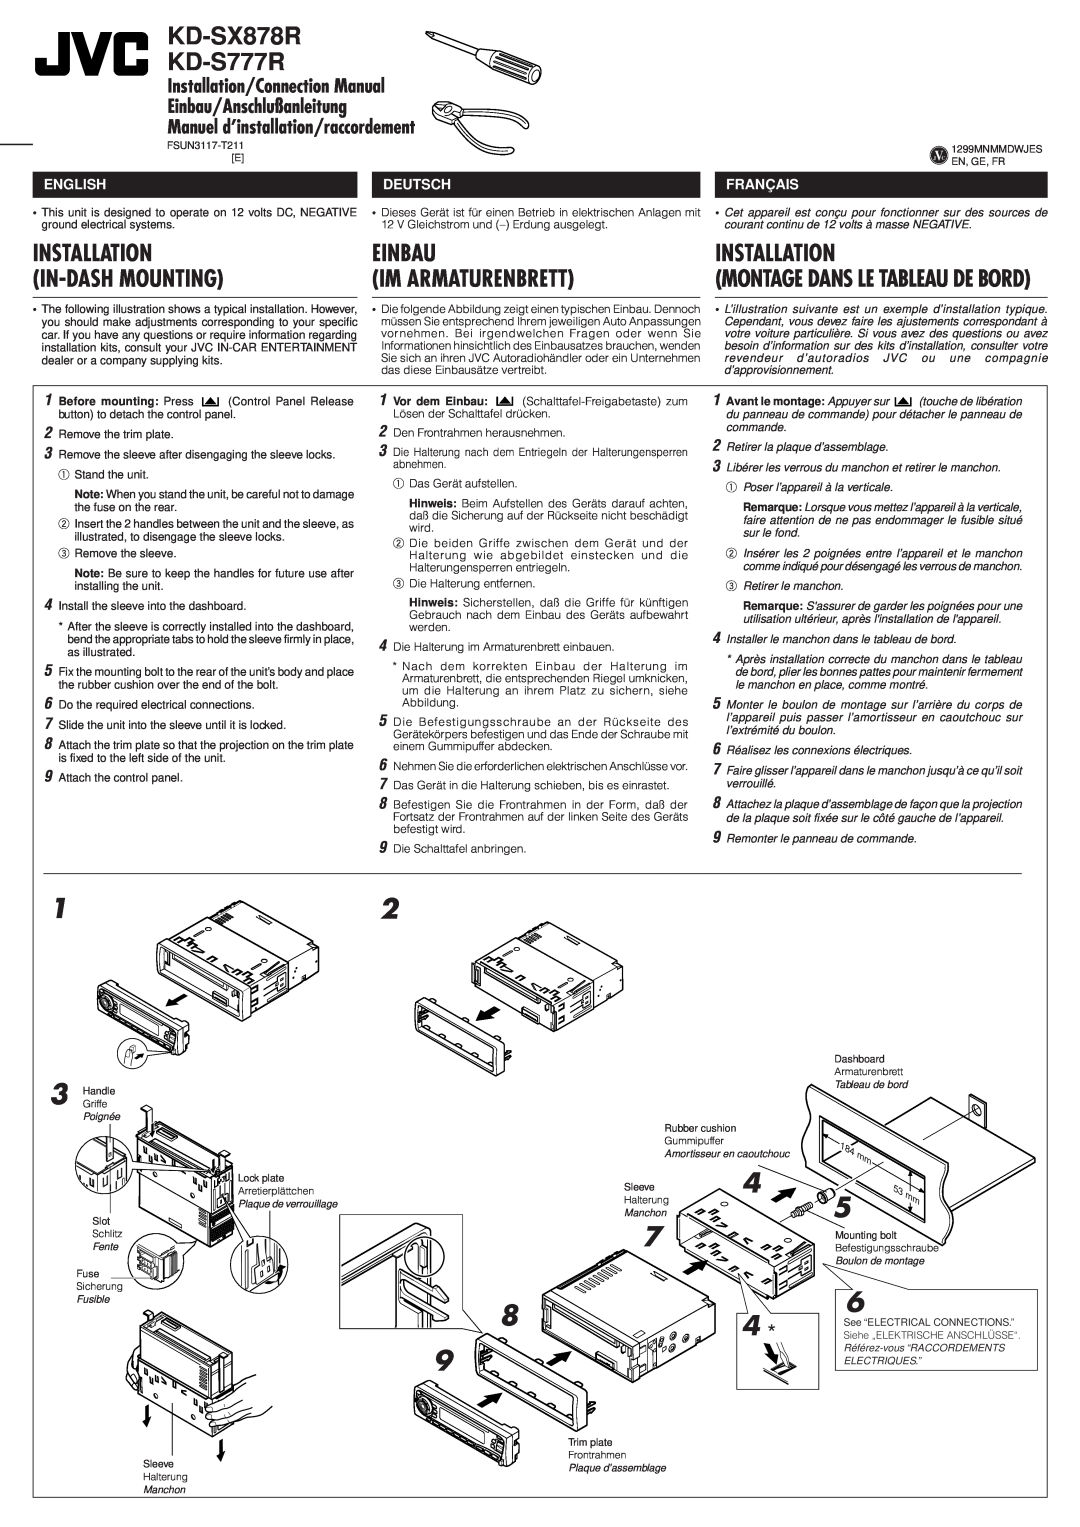 JVC manual Einbau Im Armaturenbrett, Installation, English, Deutsch, Français, KD-SX878R KD-S777R 